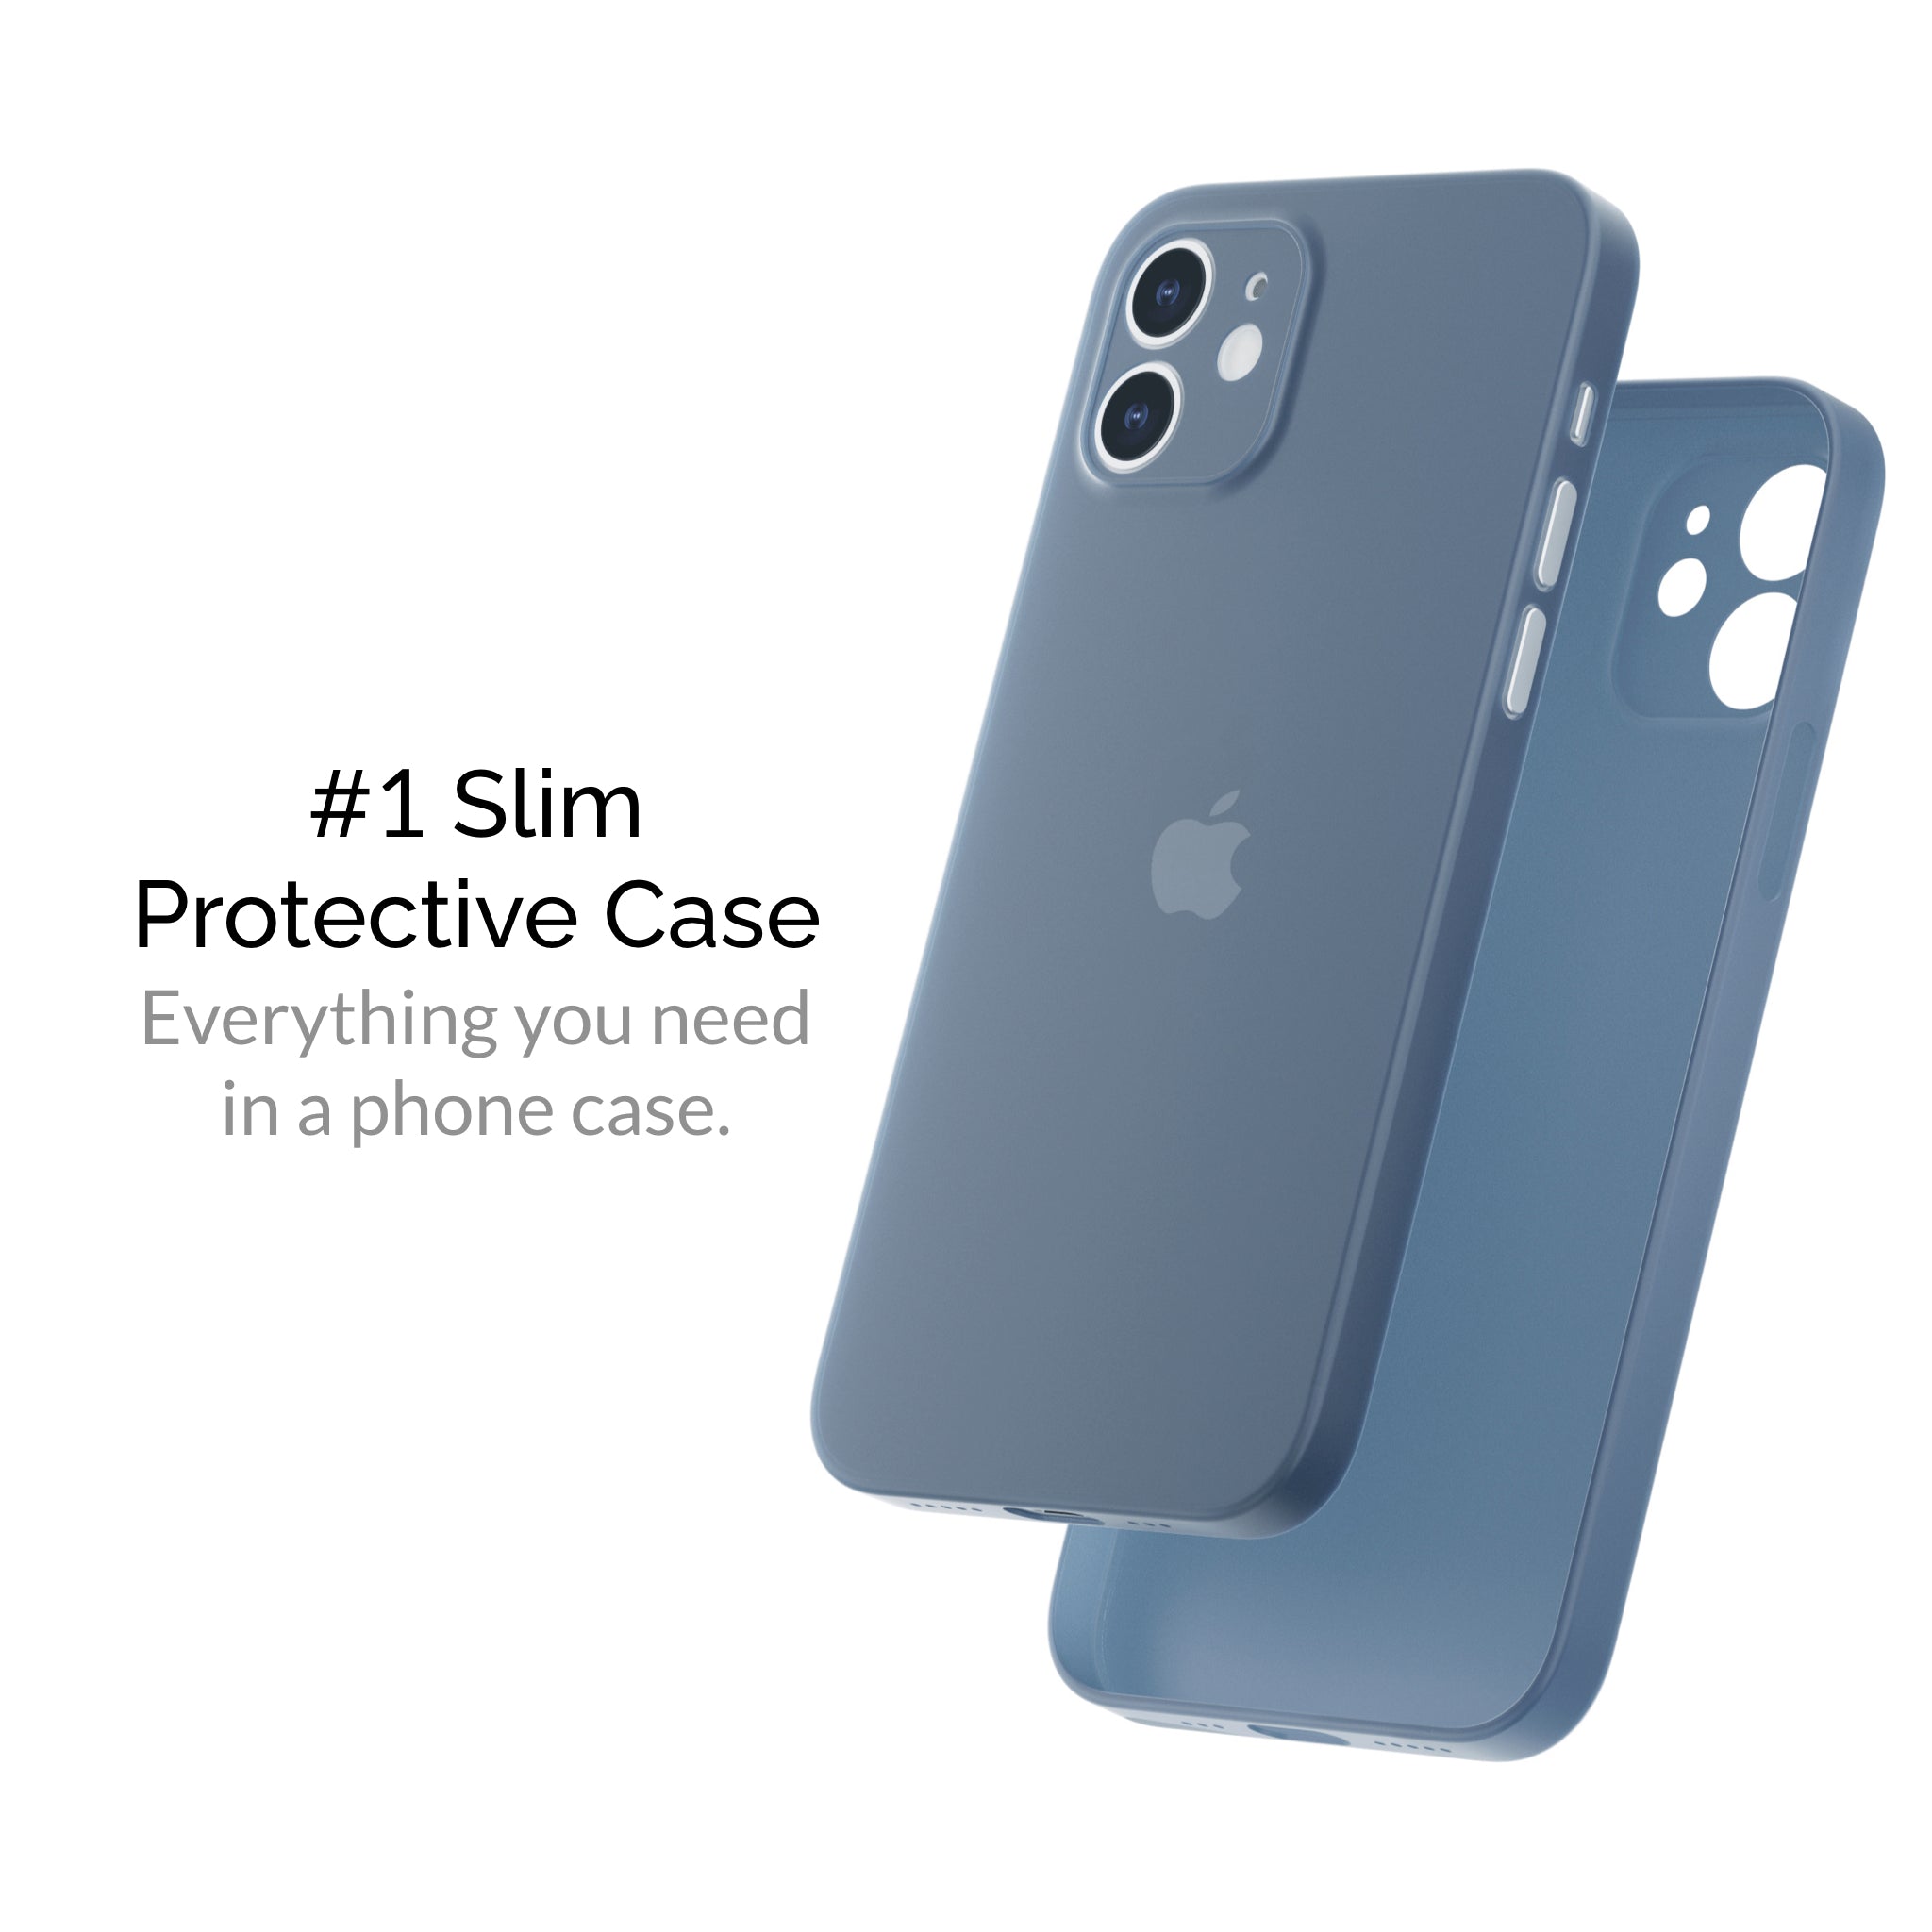 Will the iPhone 12 Mini case fit the iPhone 13 Mini? 